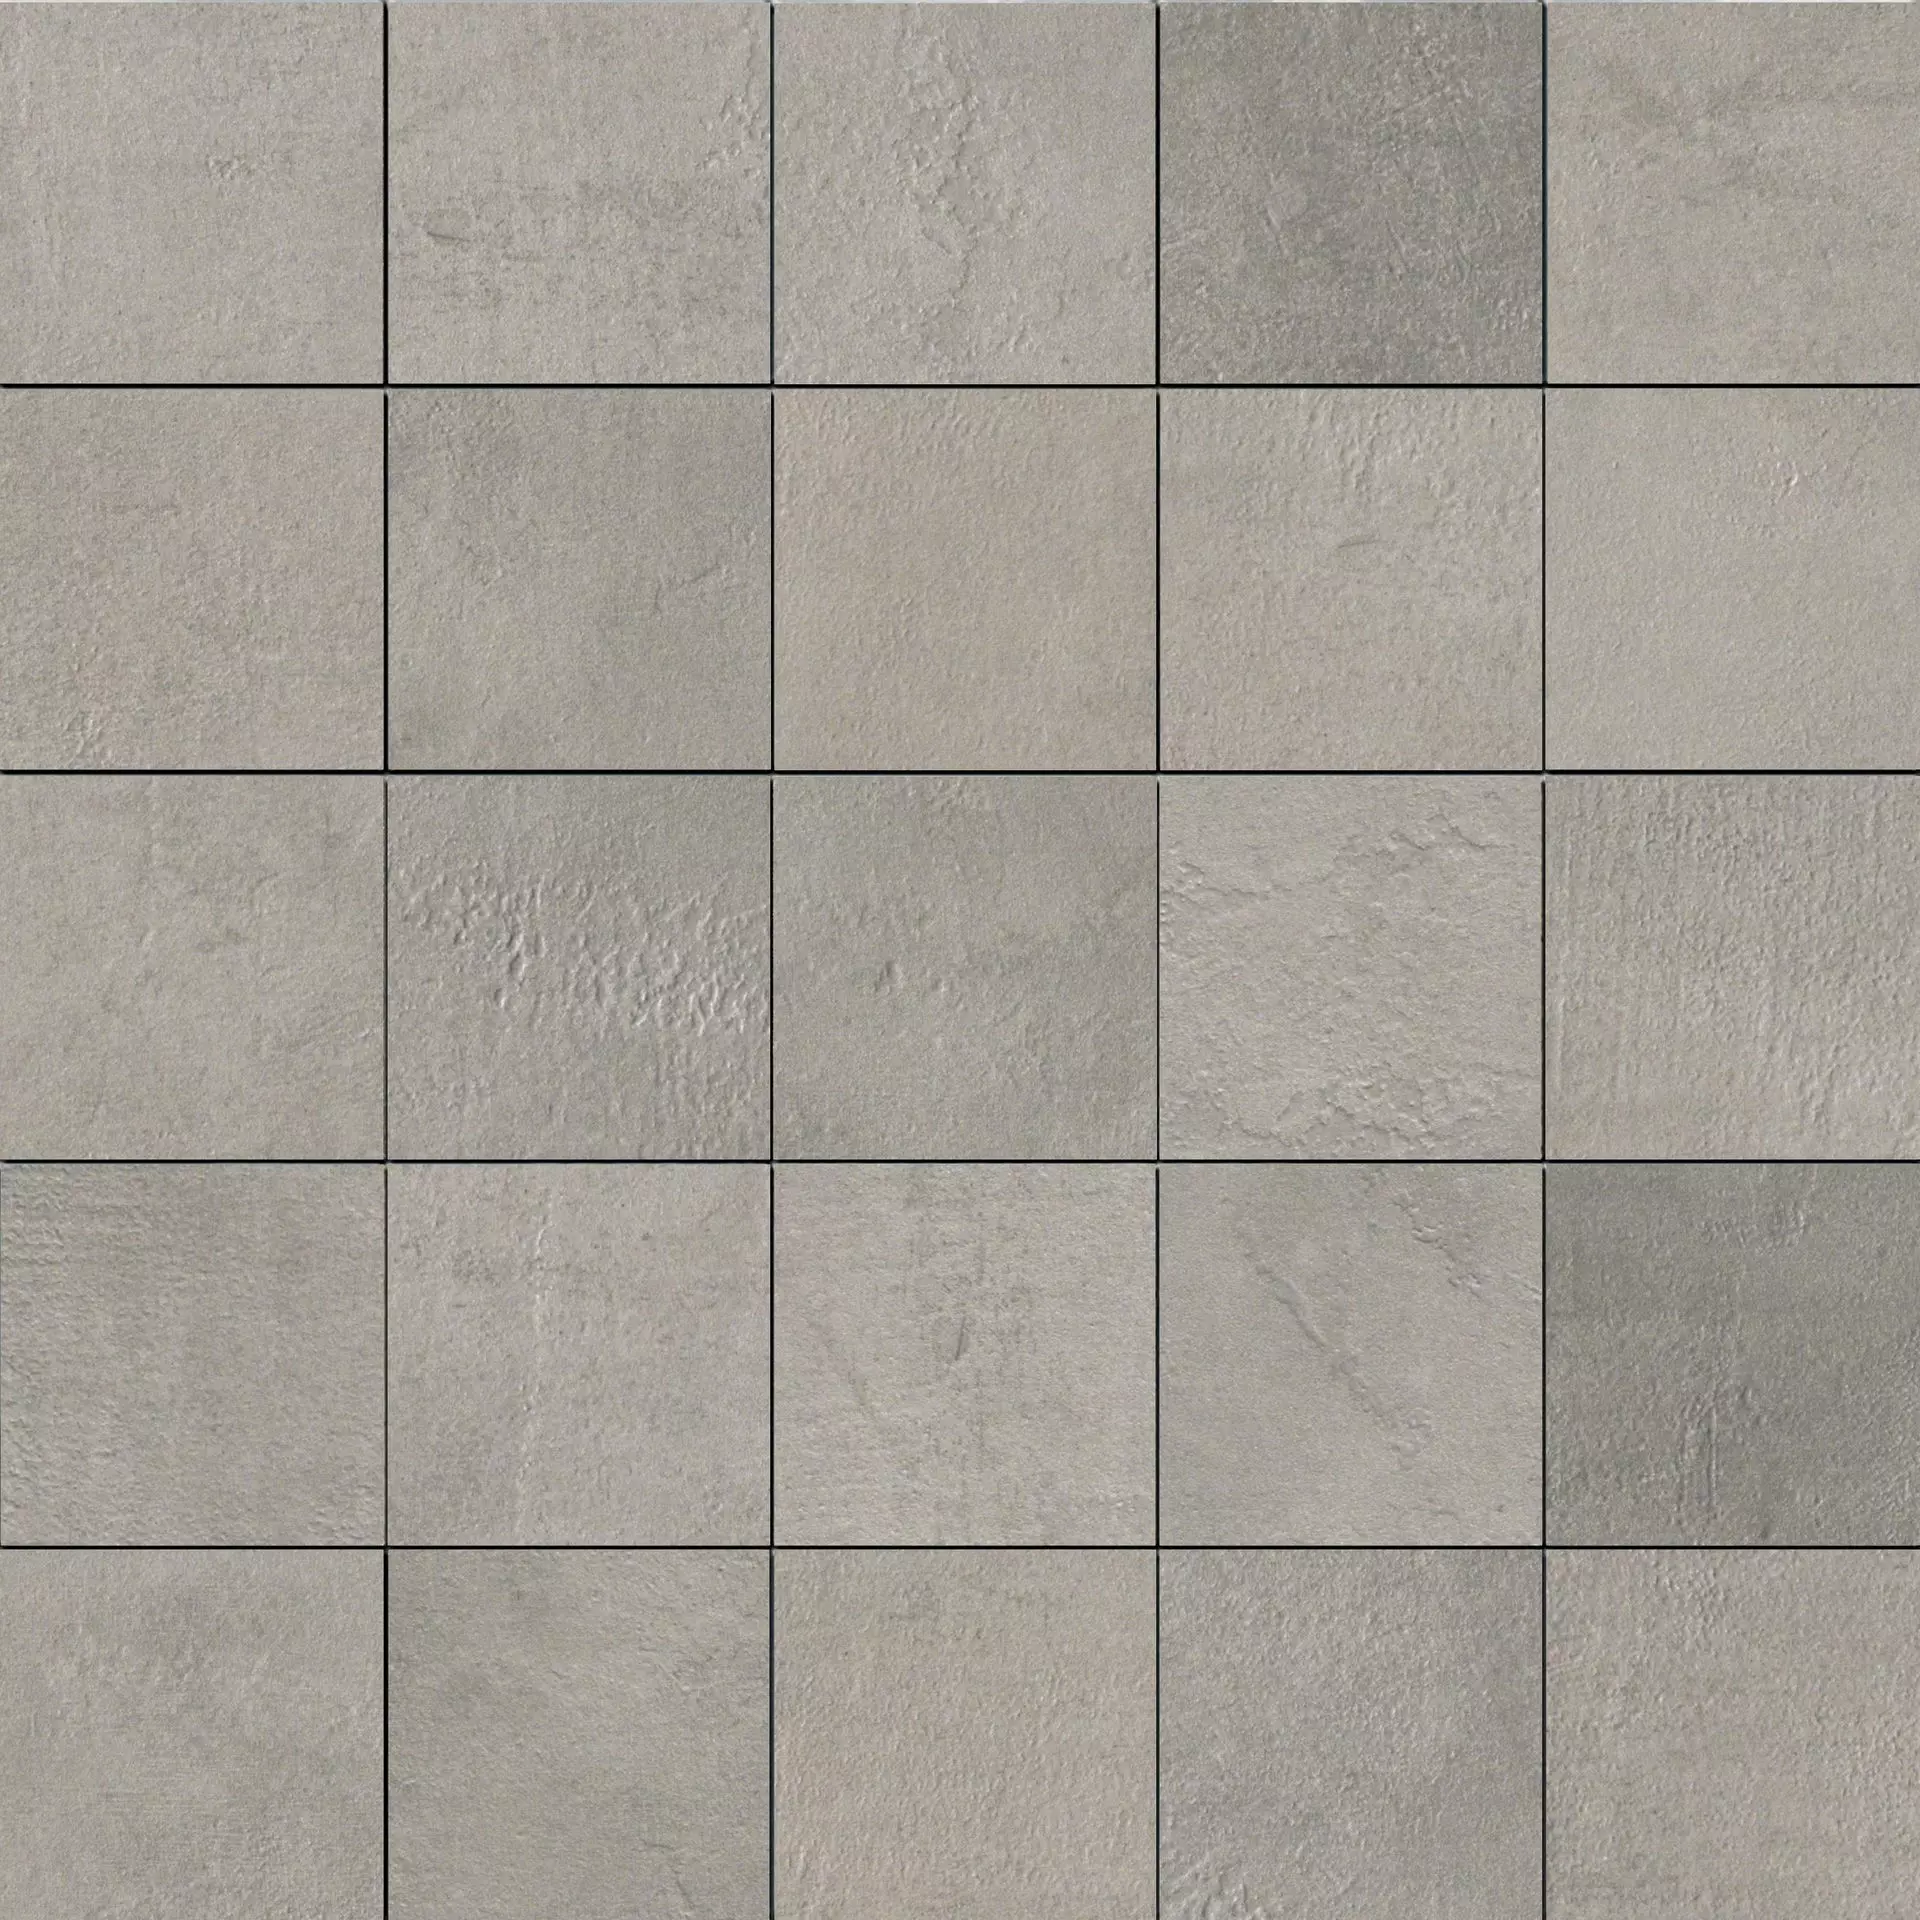 Casalgrande Beton Pearl Naturale – Matt Mosaic 6x6 1704484 30x30cm rectified 10mm